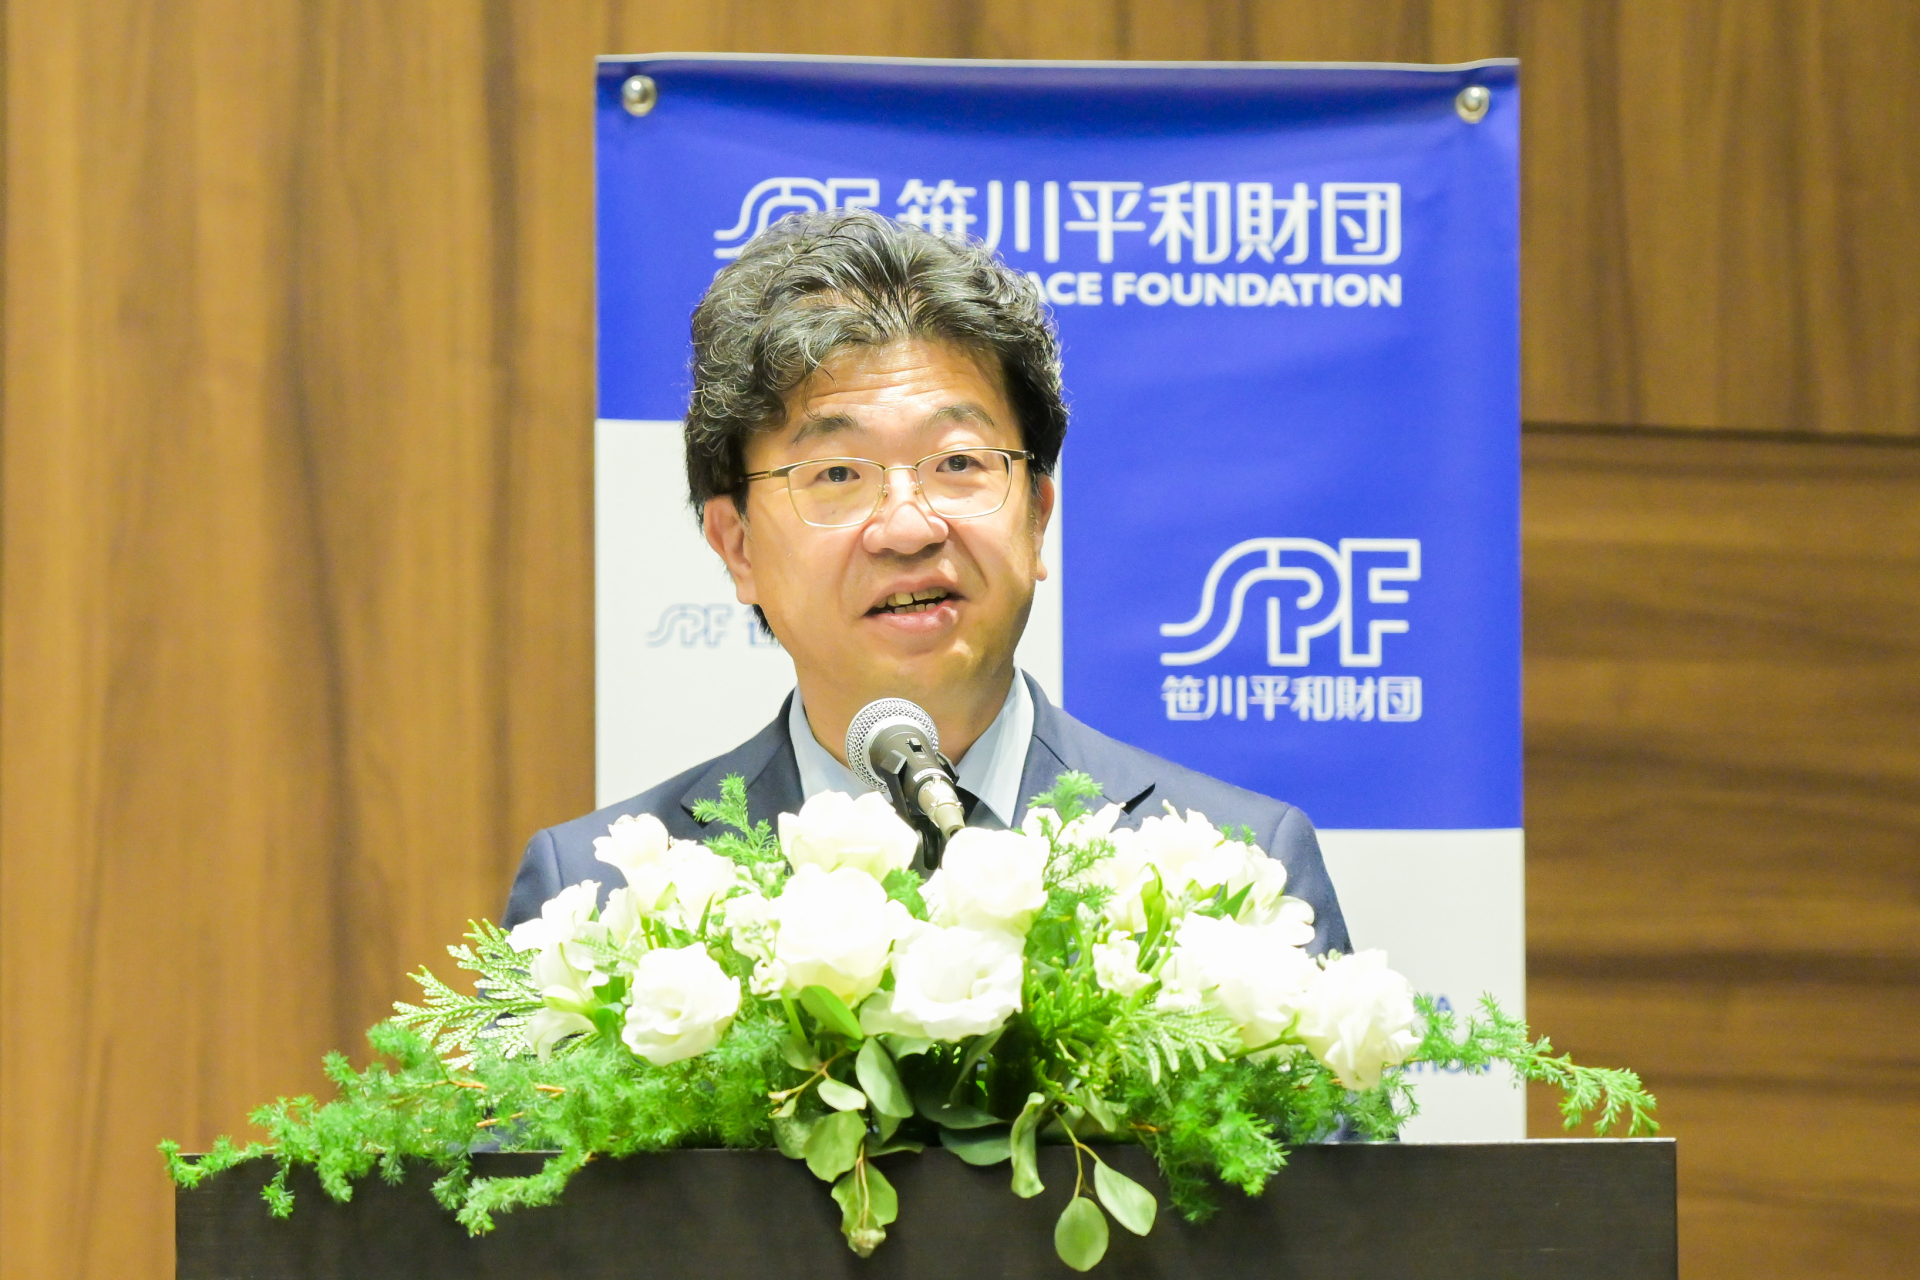 Dr. Sunami at the podium